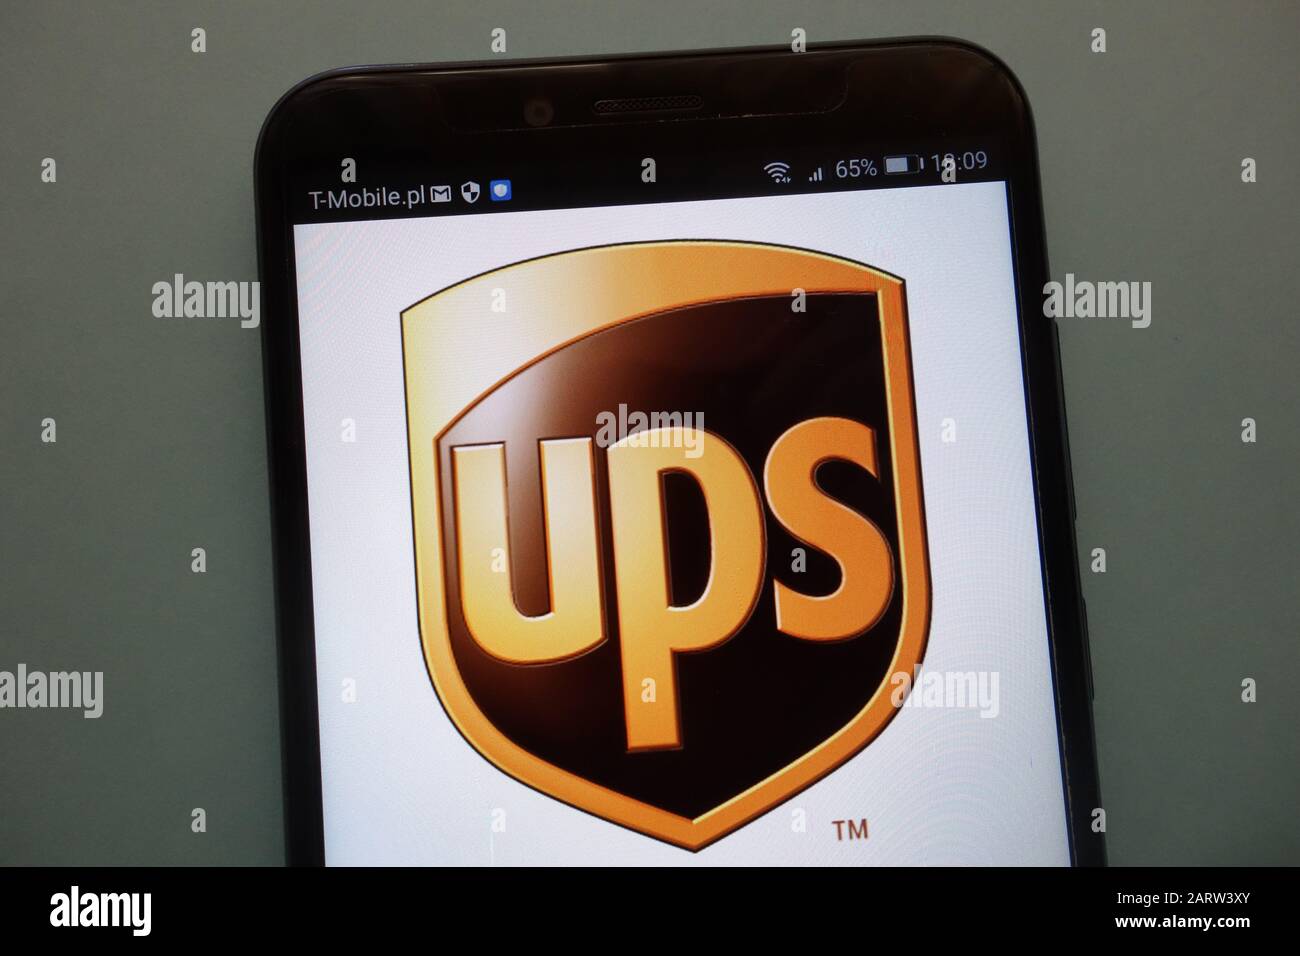 UPS logo on a smartphone Stock Photo